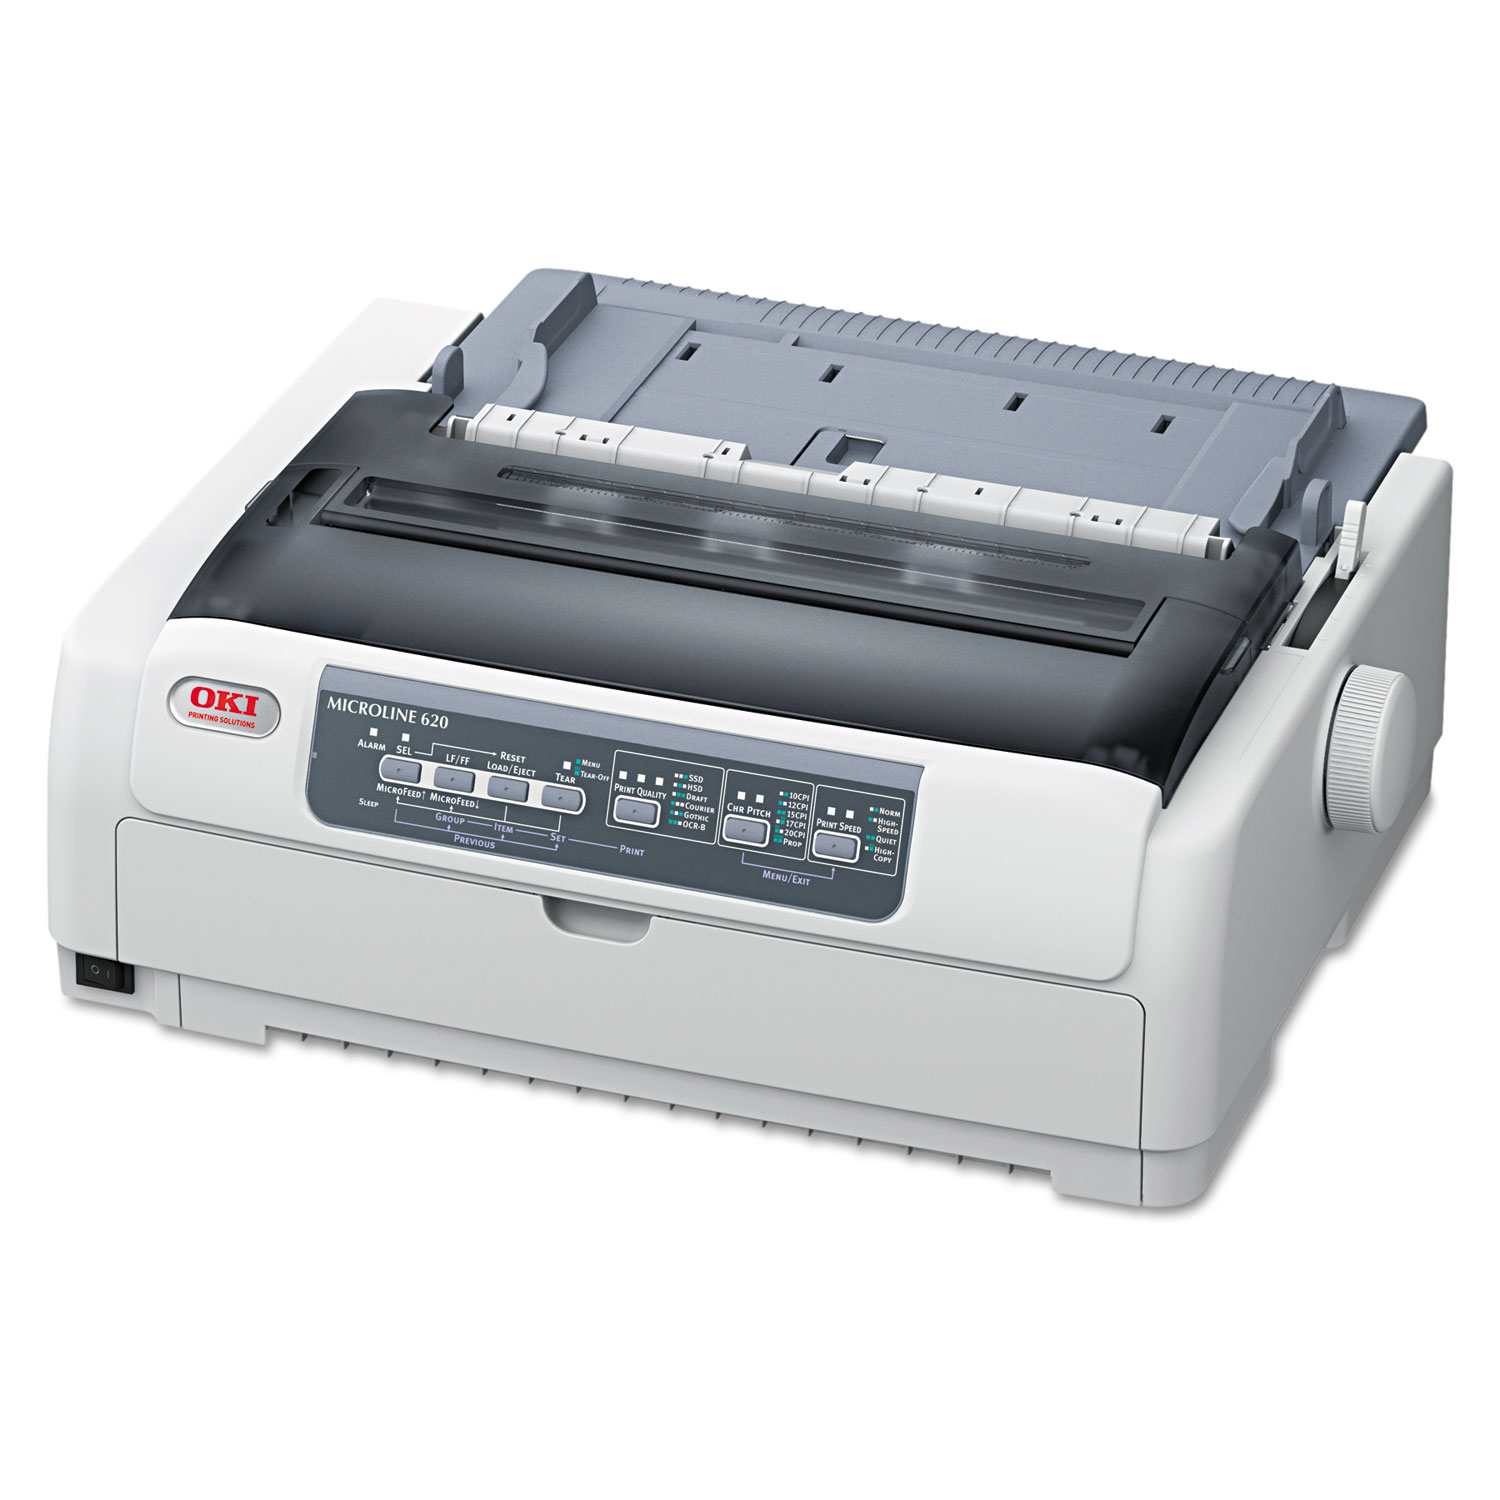 Microline 620 9-Pin Narrow Carriage Dot Matrix Printer